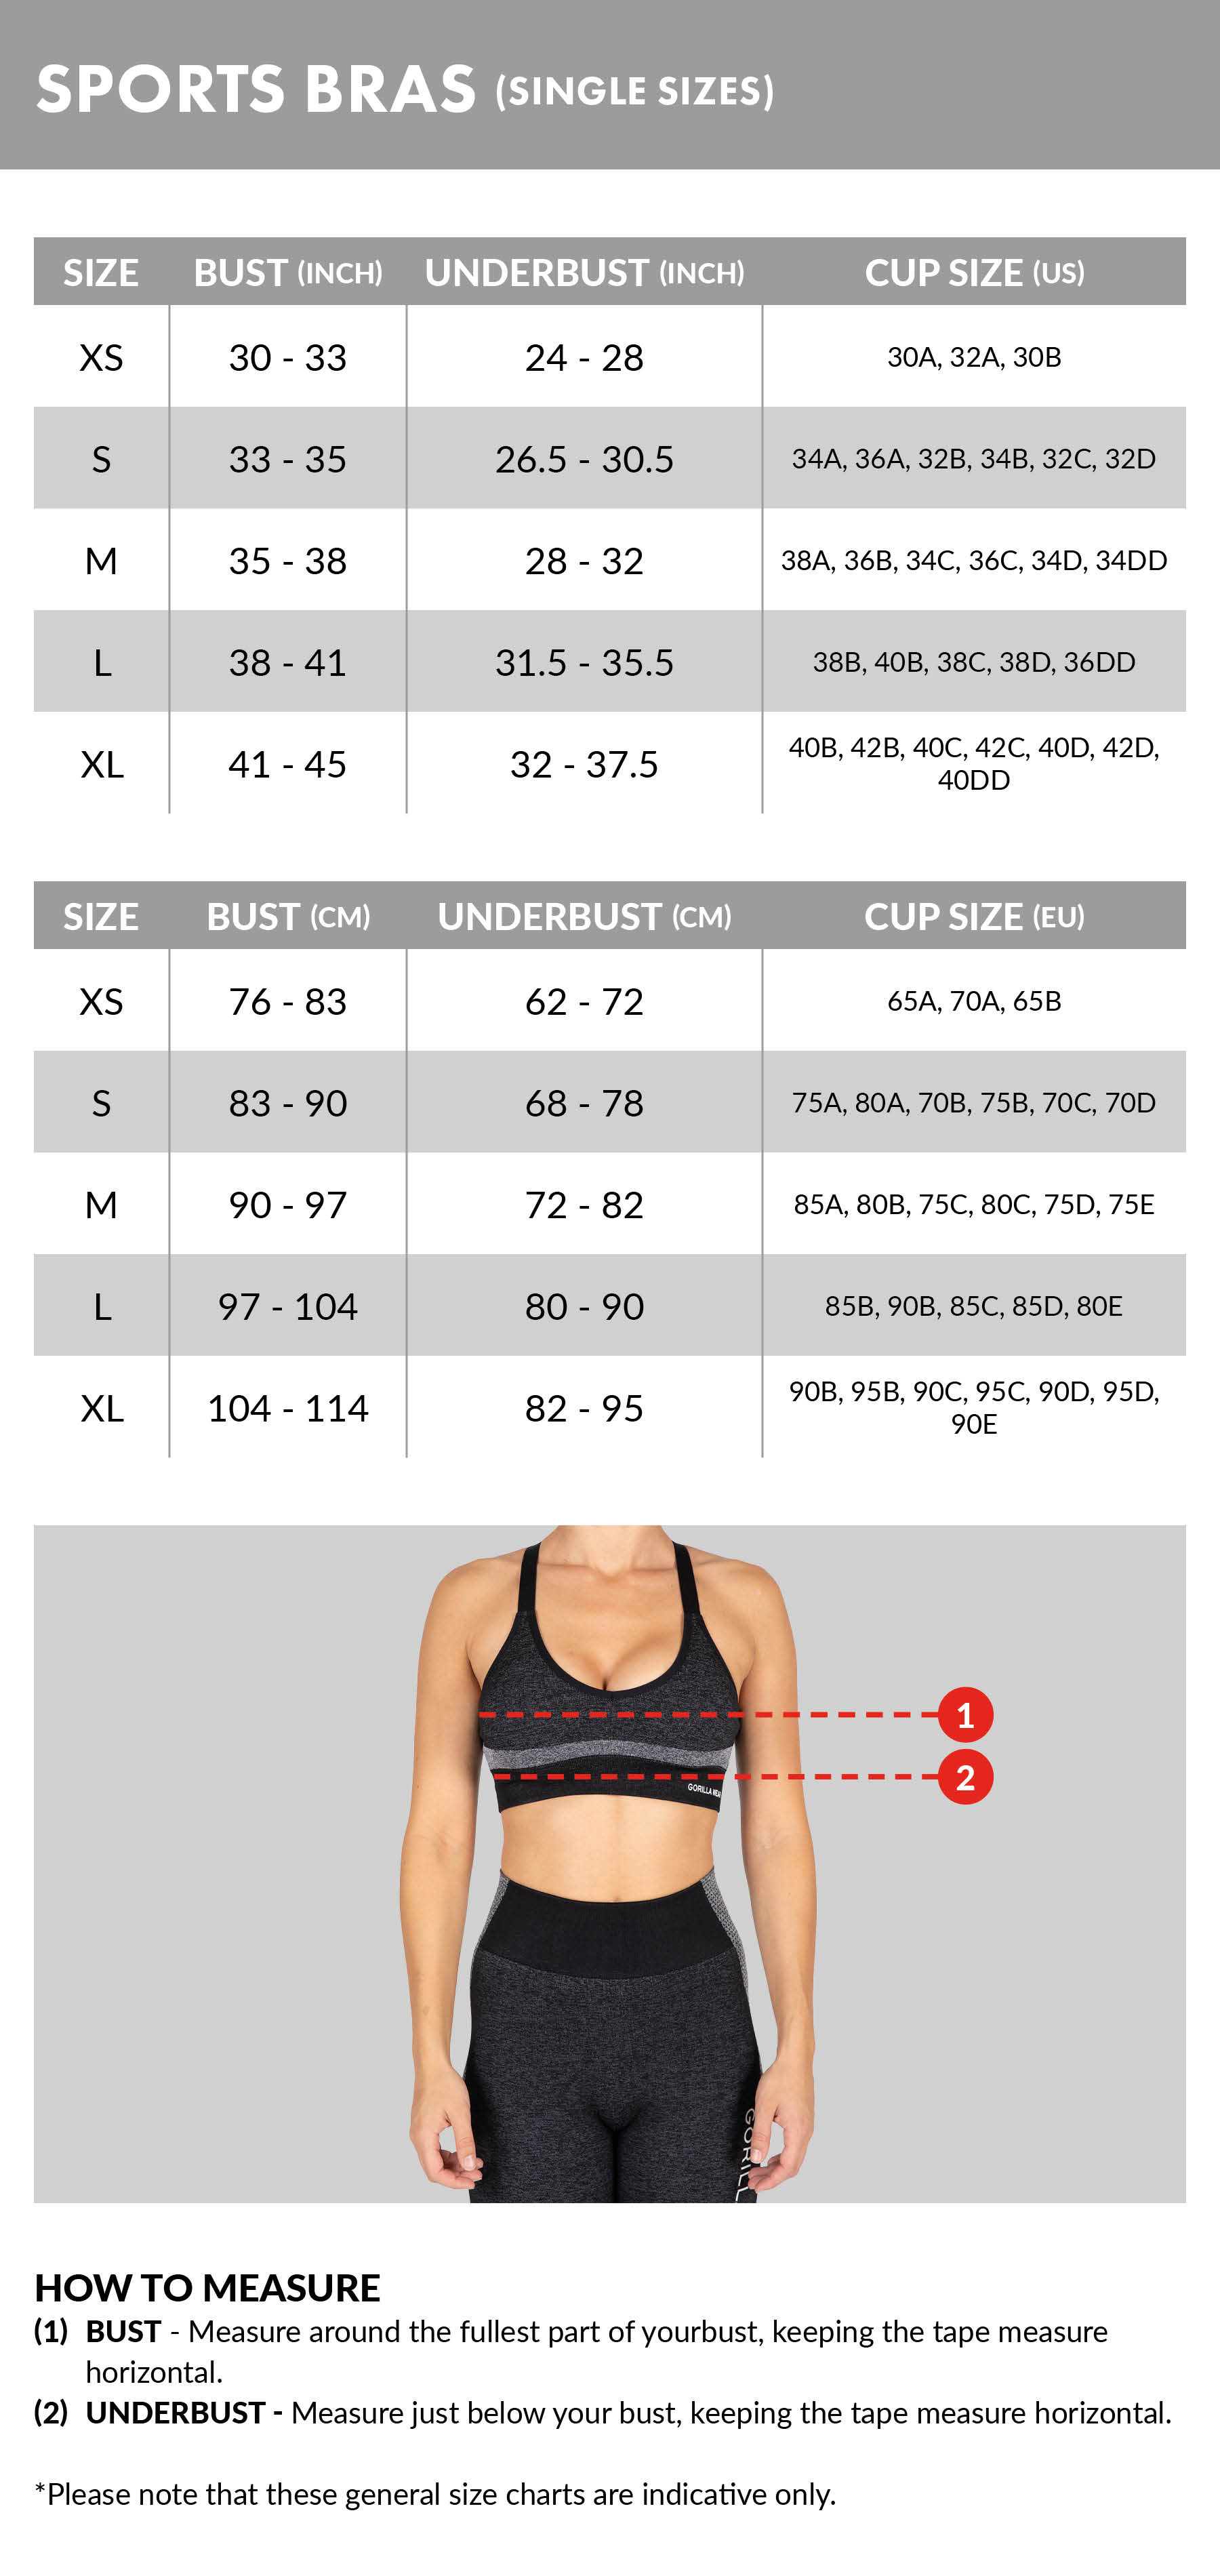 https://www.gorillawear.com/files/size-chart-sports-bras-single-sizes-eu_16282514431756.jpg